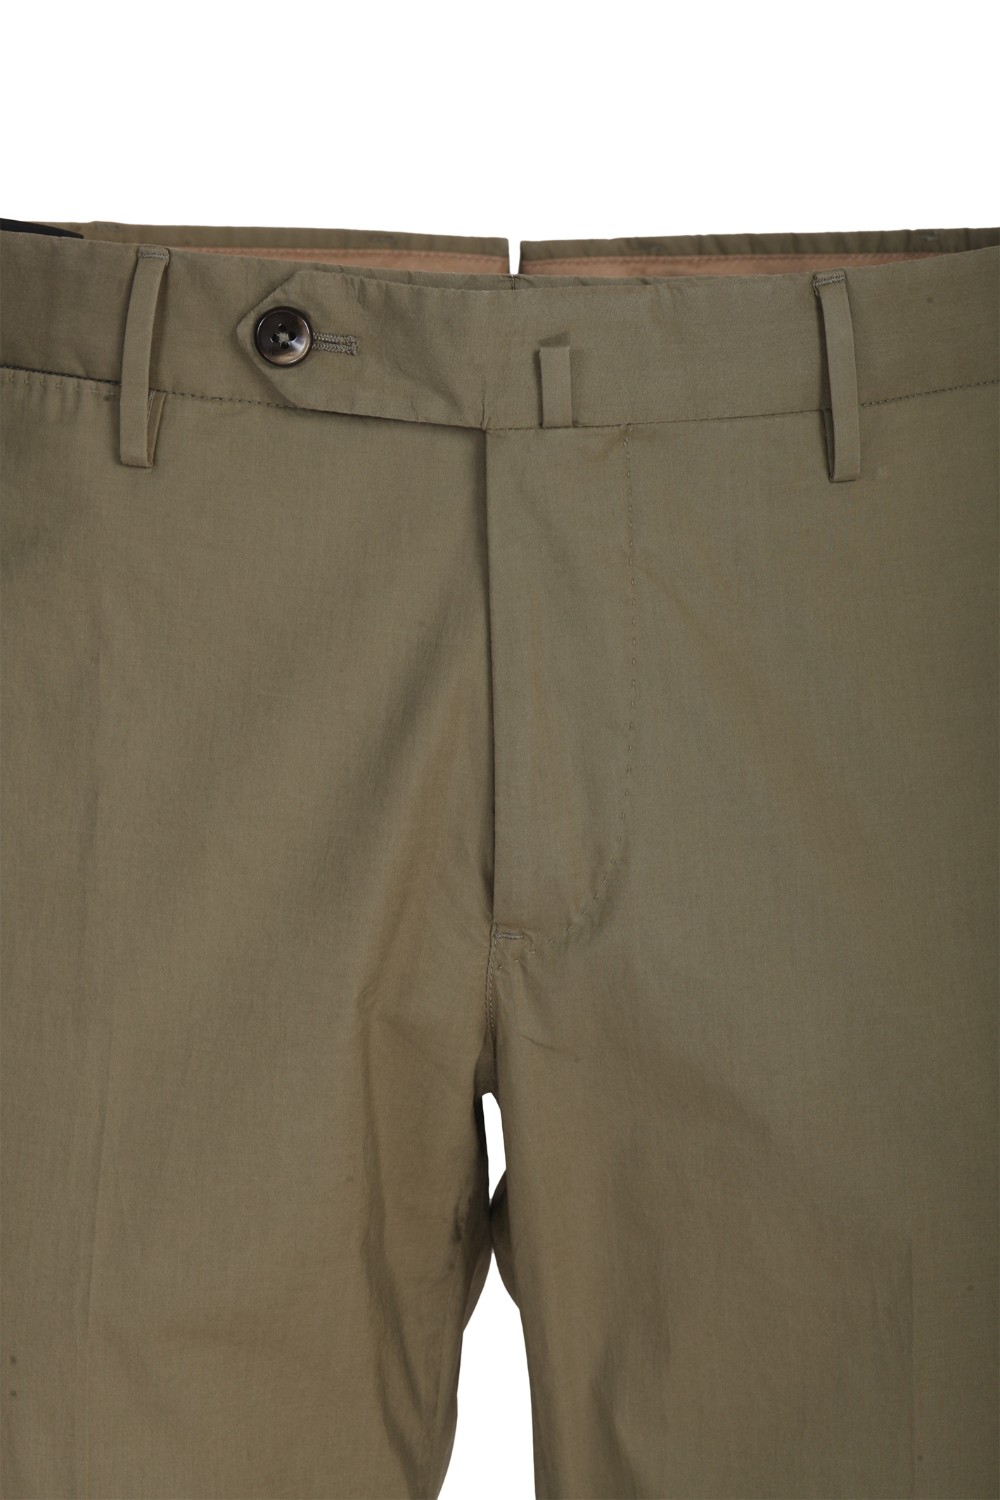 shop PT01 Saldi Pantalone: PT 01 pantalone verde in cotone.
Vestibilità superslim.
Tasche frontali oblique, chiusura con zip.
98 % cotone 2% elastan. BP23-0445 number 2317340